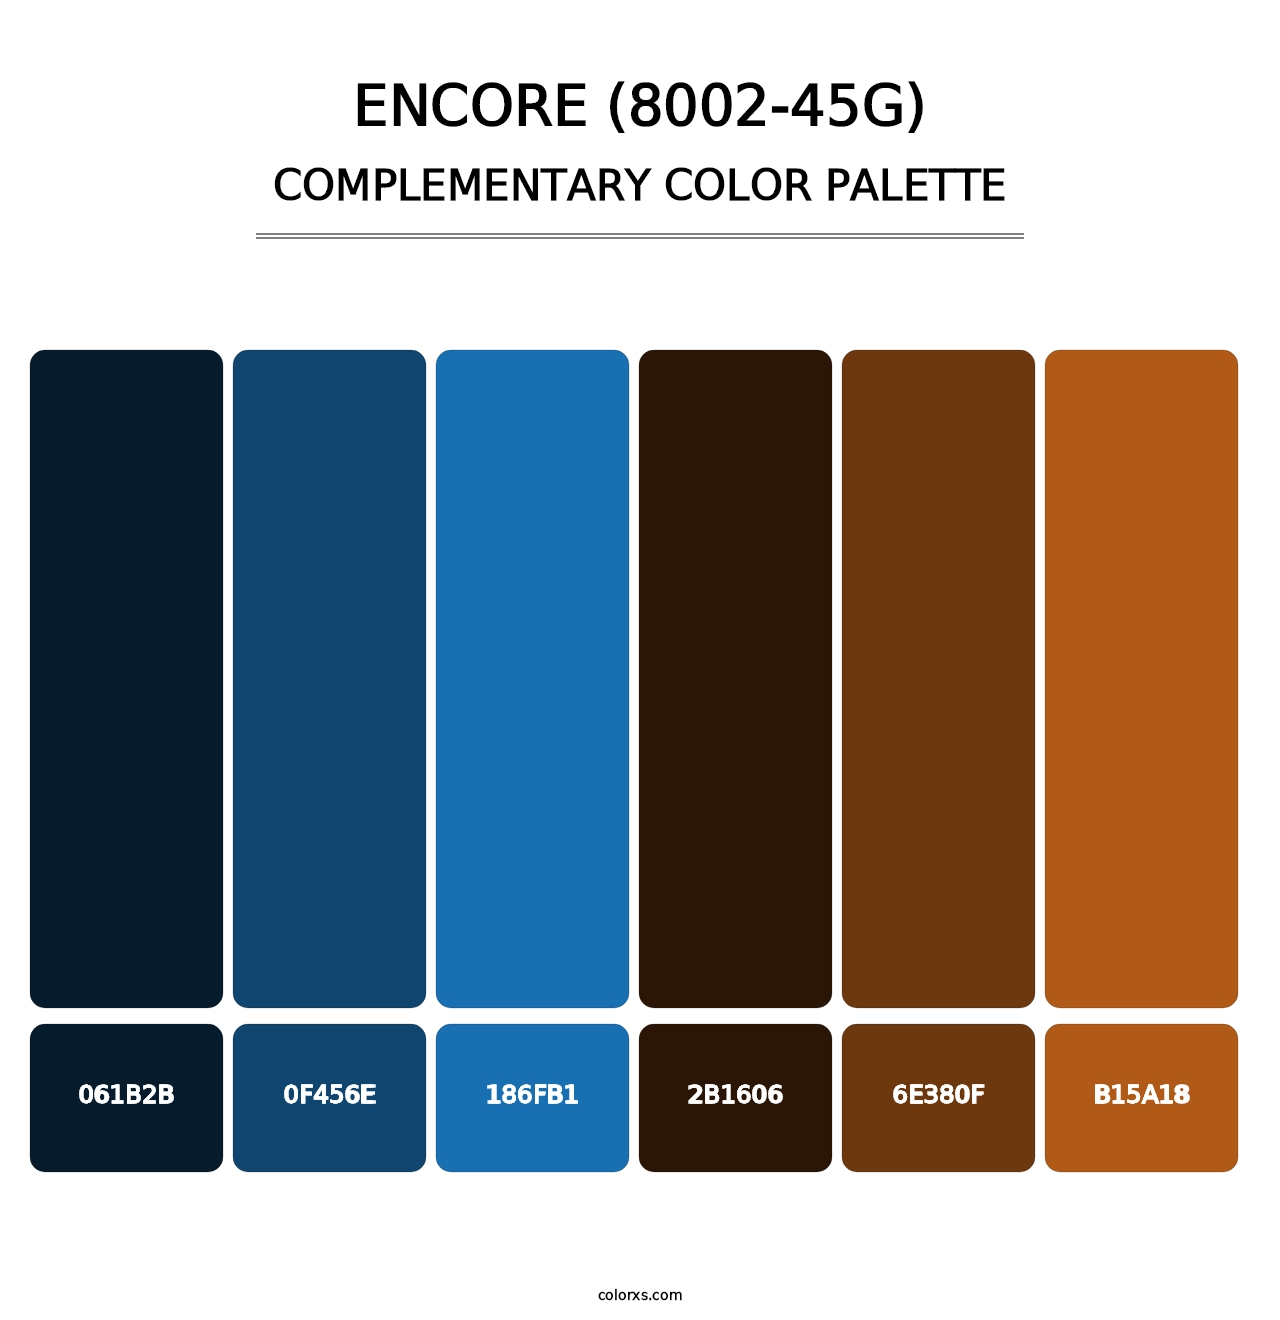 Encore (8002-45G) - Complementary Color Palette